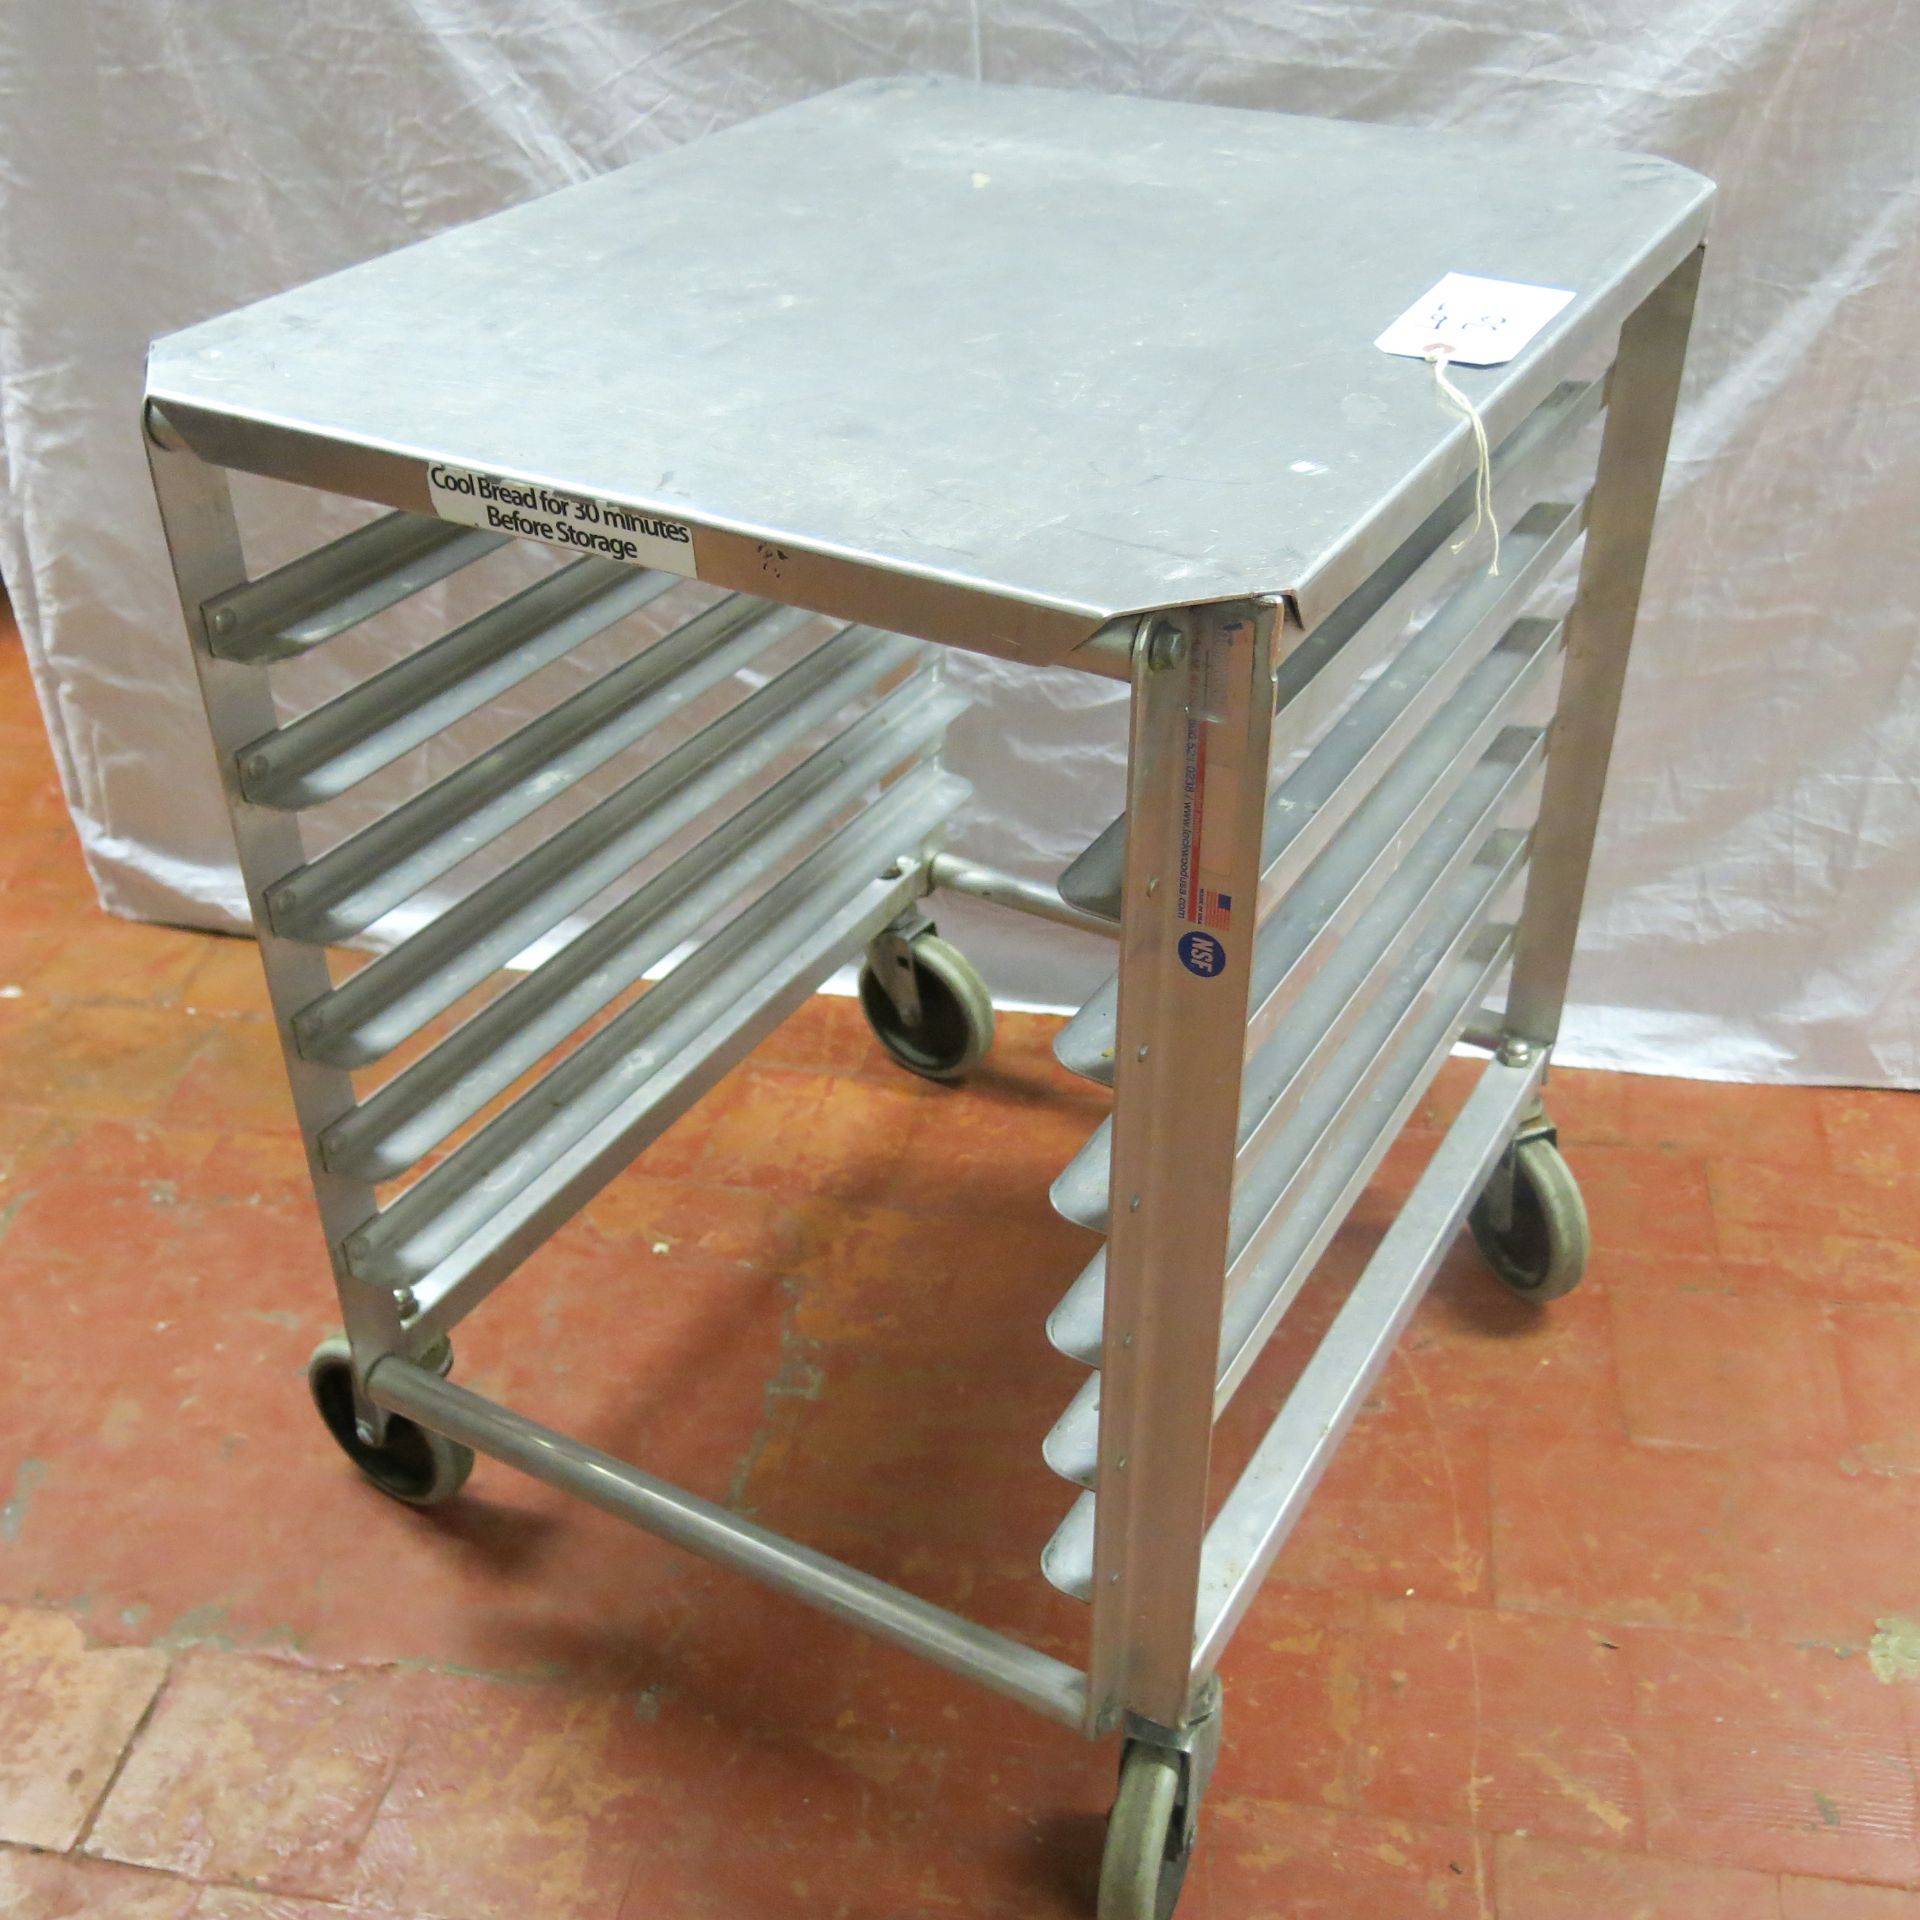 Lockwood 6 Shelf Aluminium Mobile Rack. Size H75cm x W68cm x D54cm - Image 2 of 4